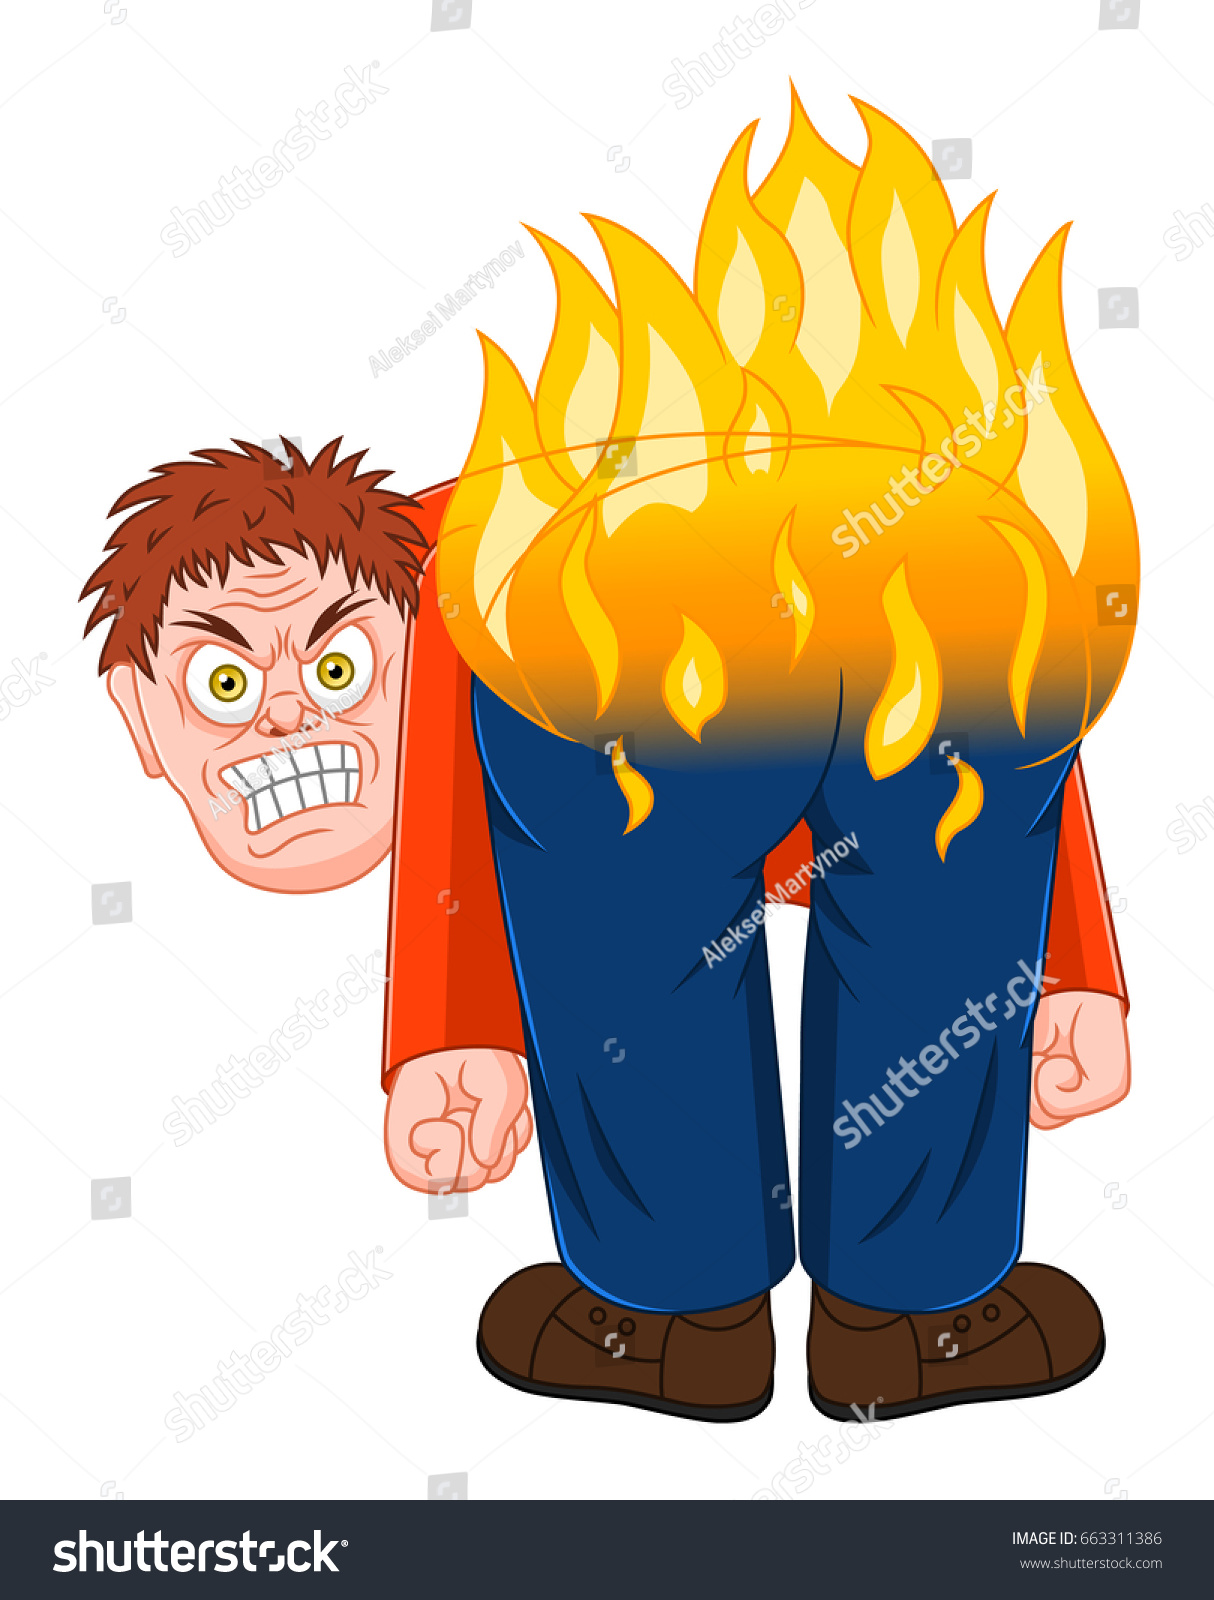 stock-vector-anger-man-with-burning-butt-663311386.jpg